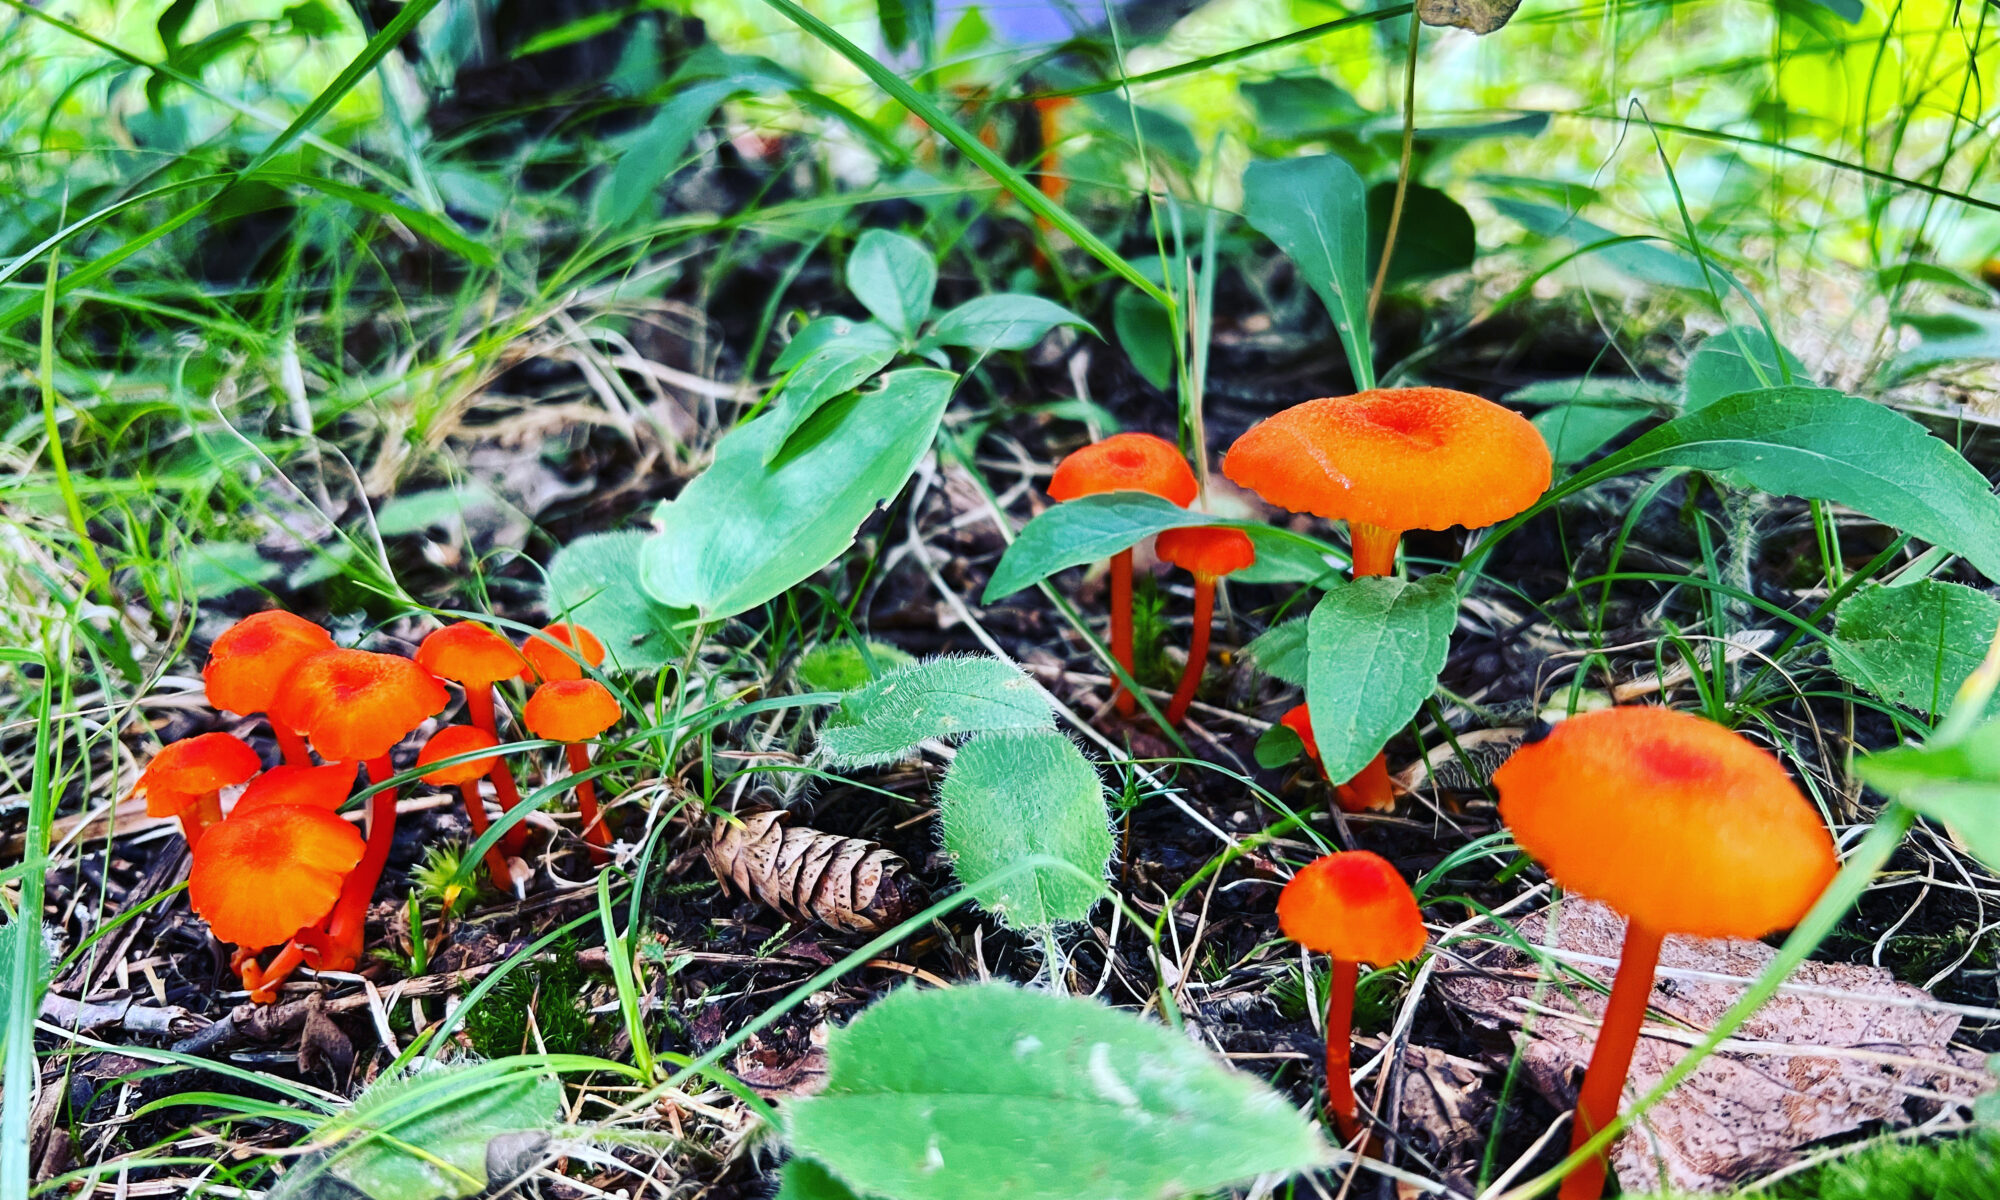 orange mushrooms amidst greenery